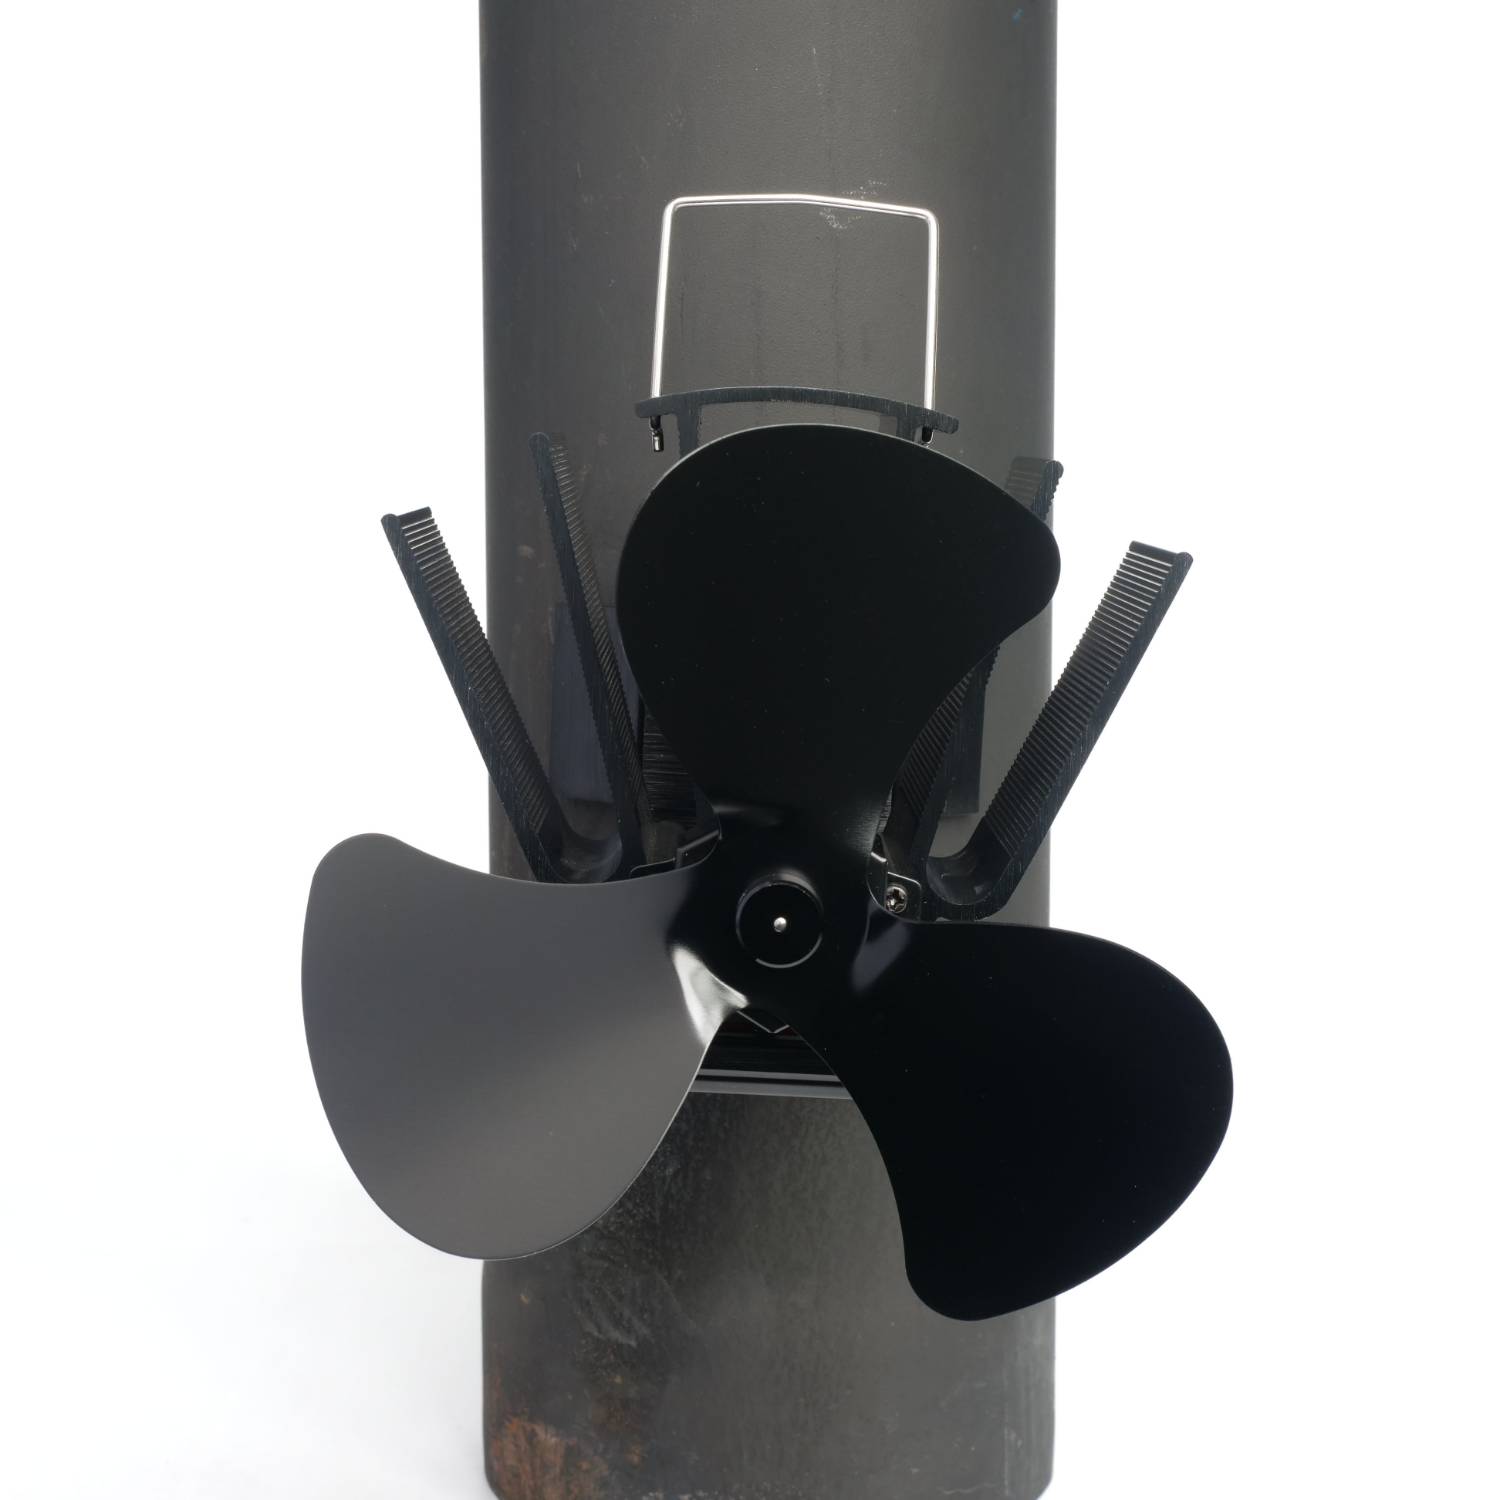 Lehman's Heat-Powered Oscillating Stove Fan